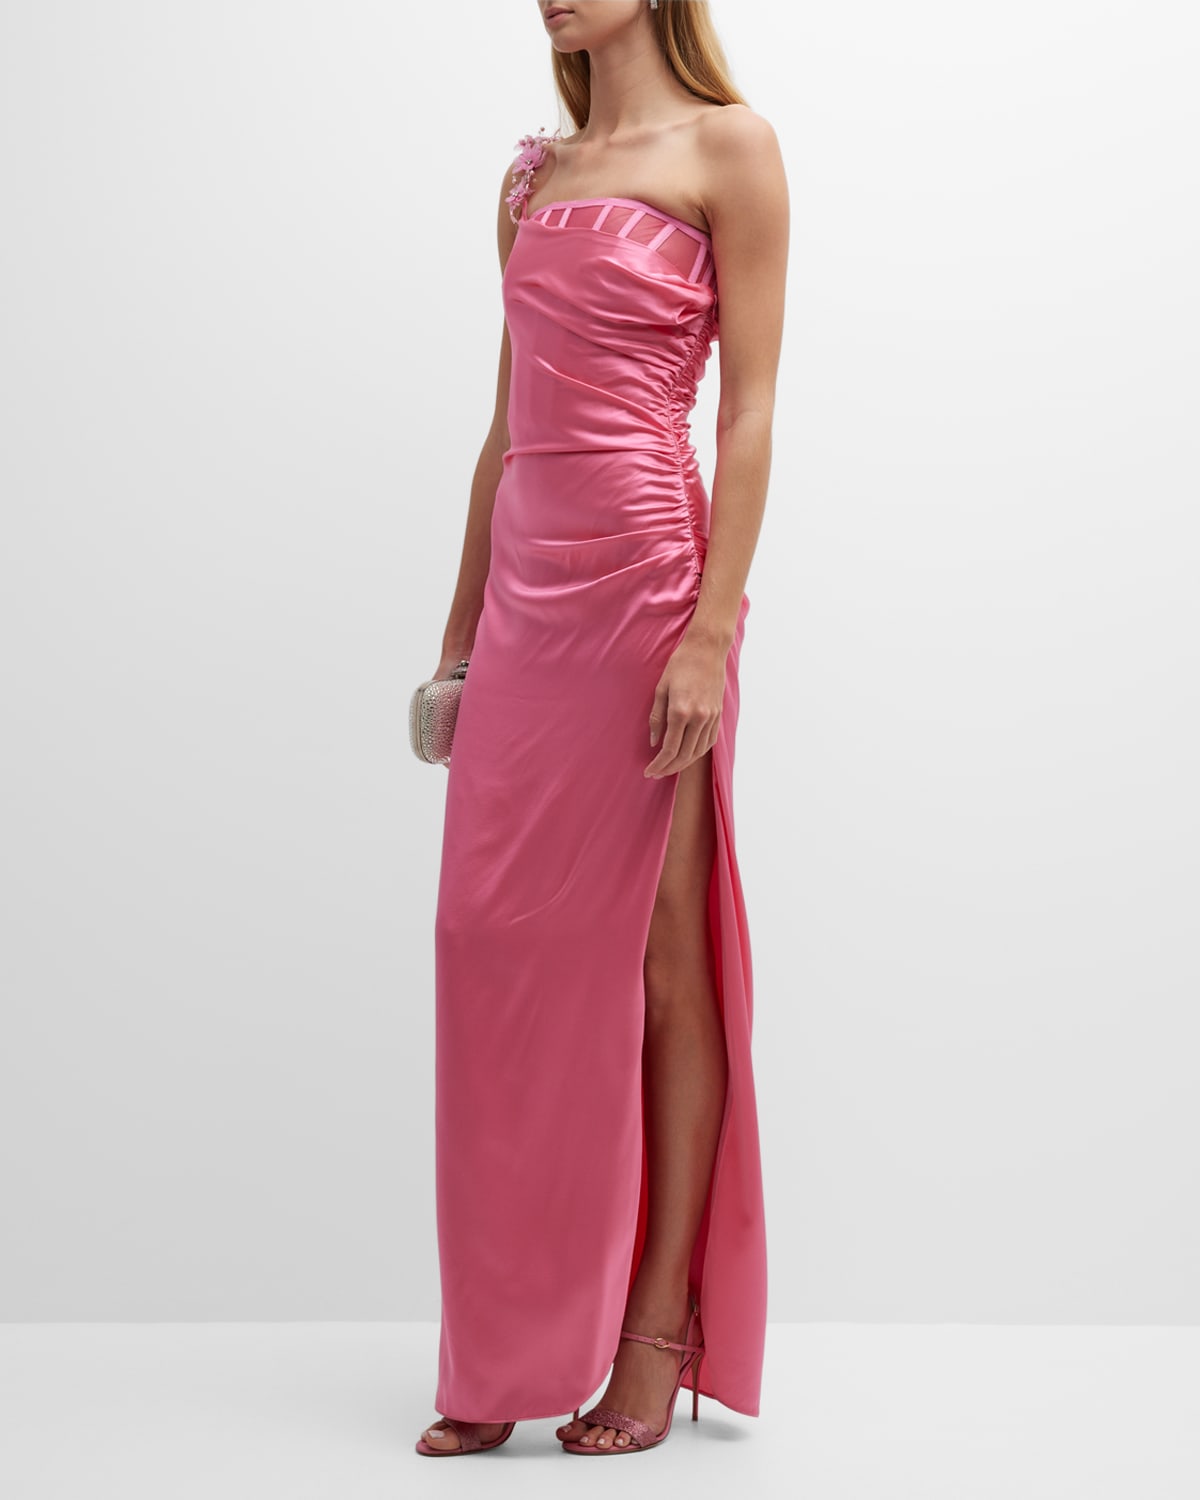 Aliétte Bustier One-shoulder Ruched Gown In Hot Pink